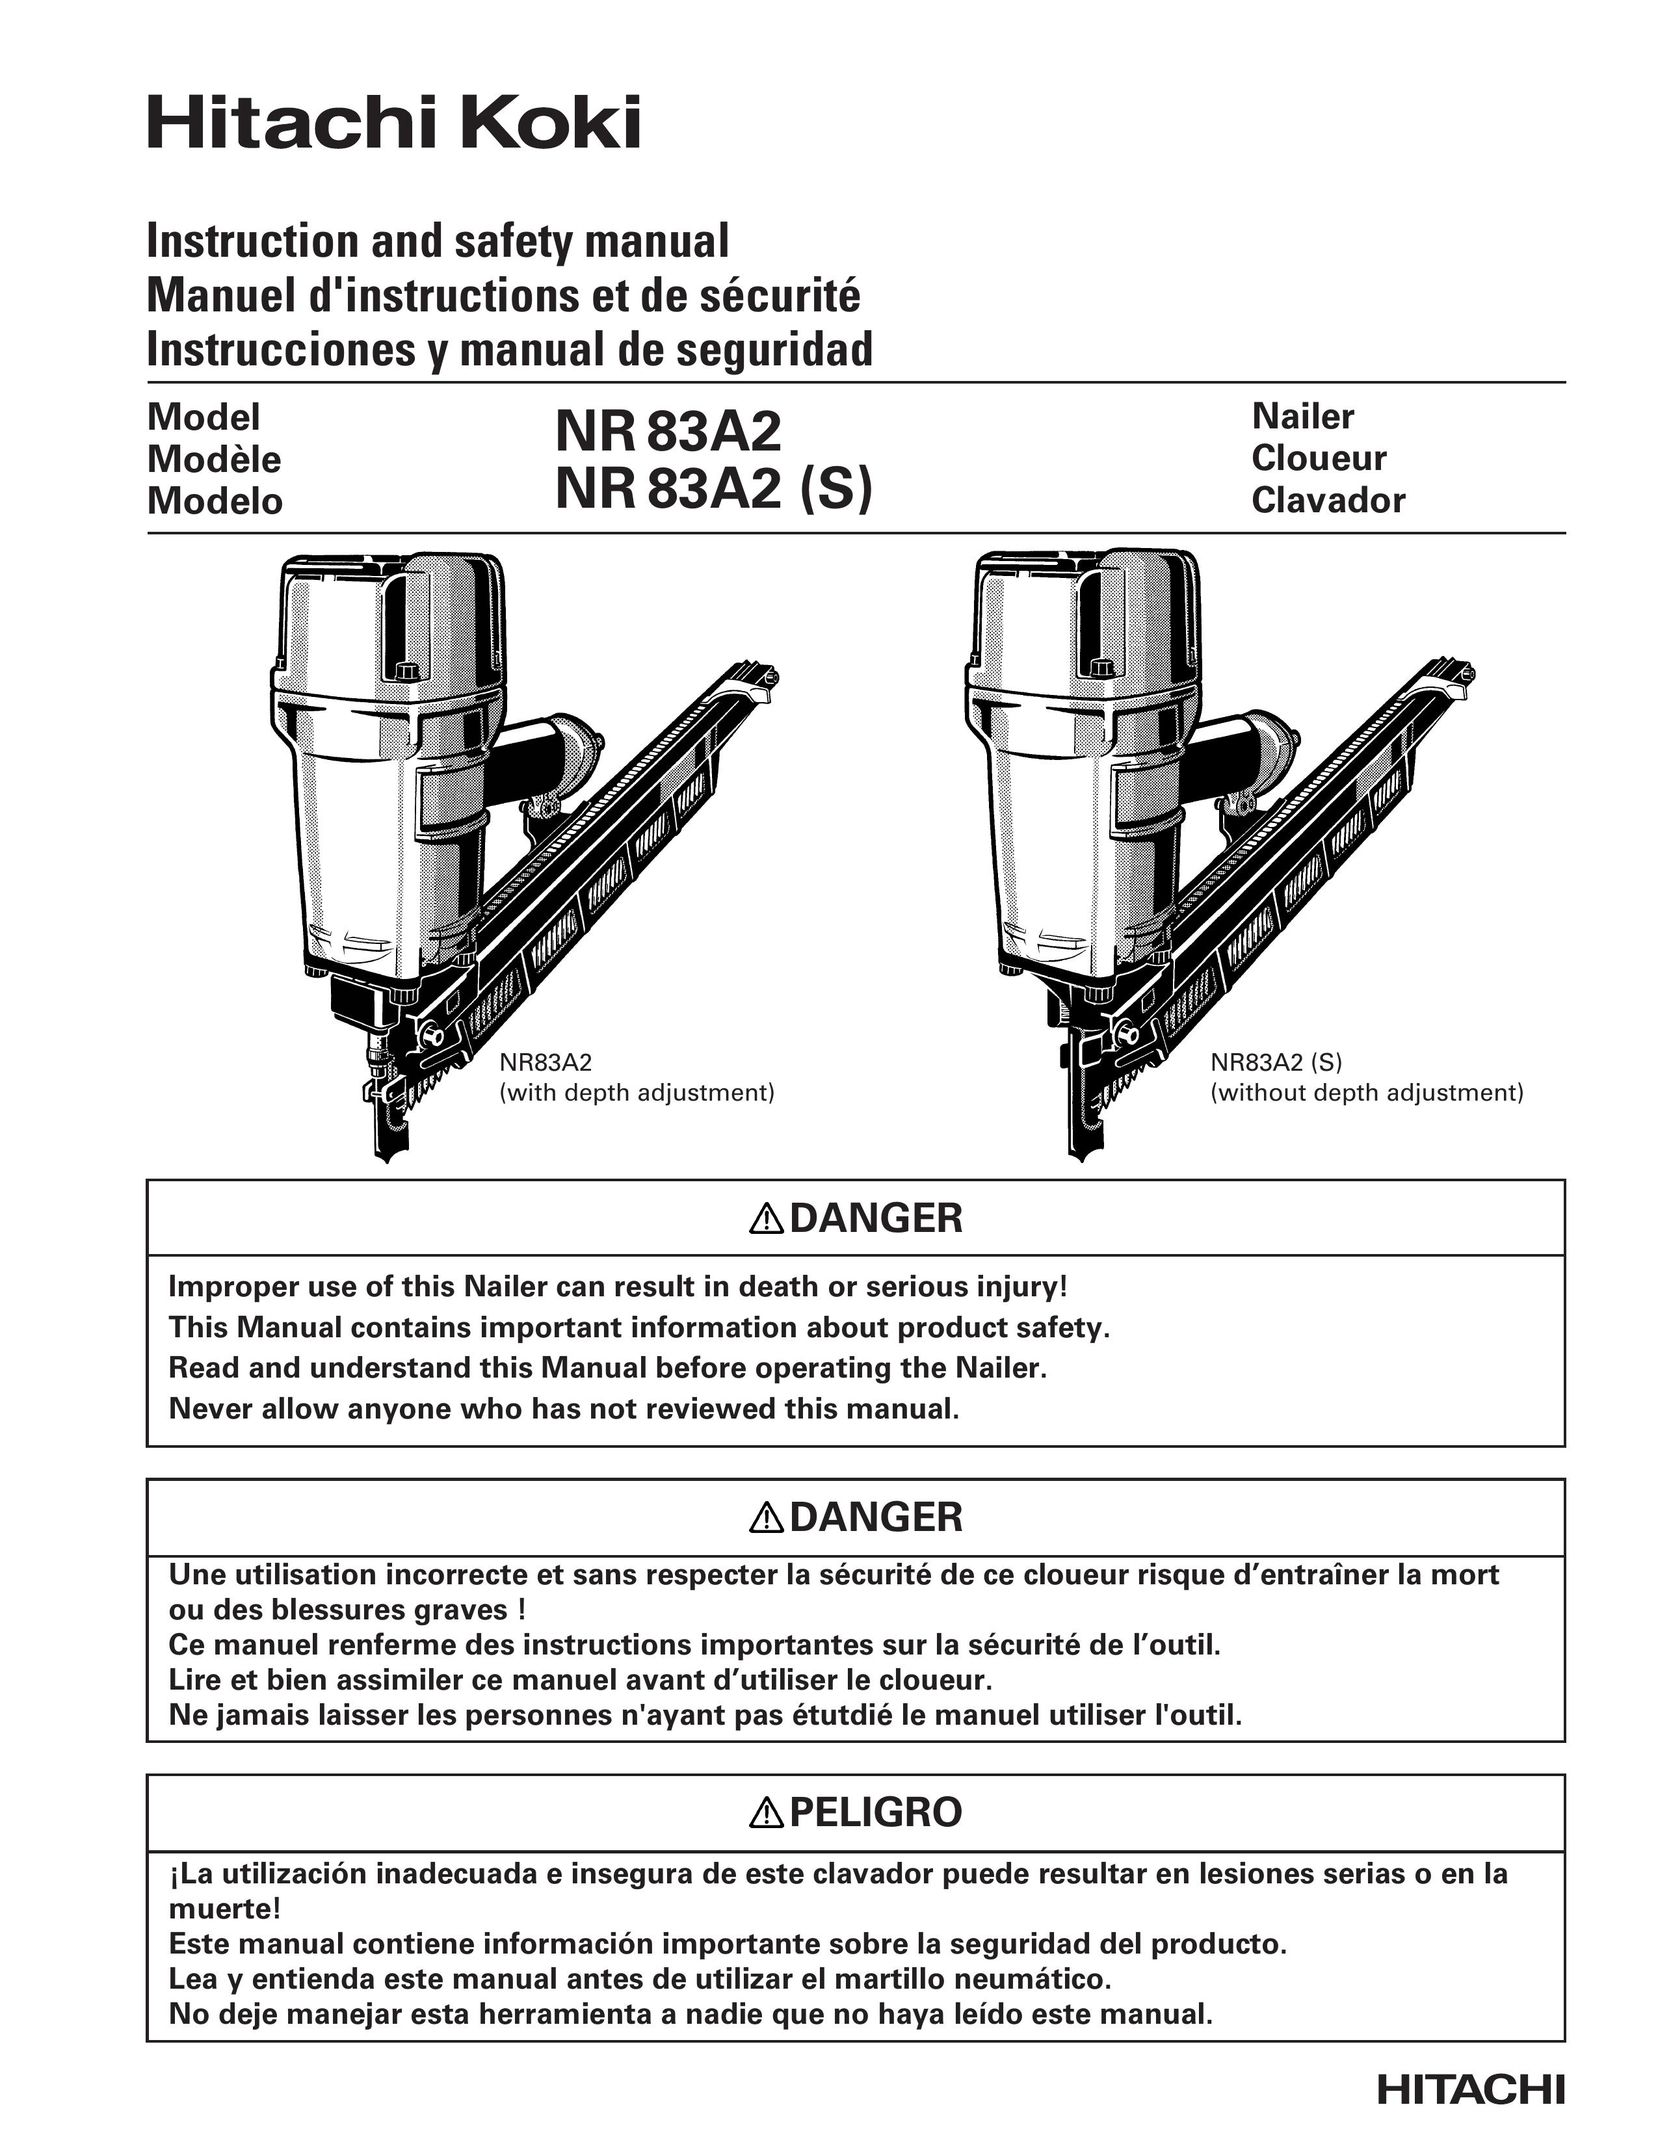 Hitachi Koki USA NR 83A2 Nail Gun User Manual